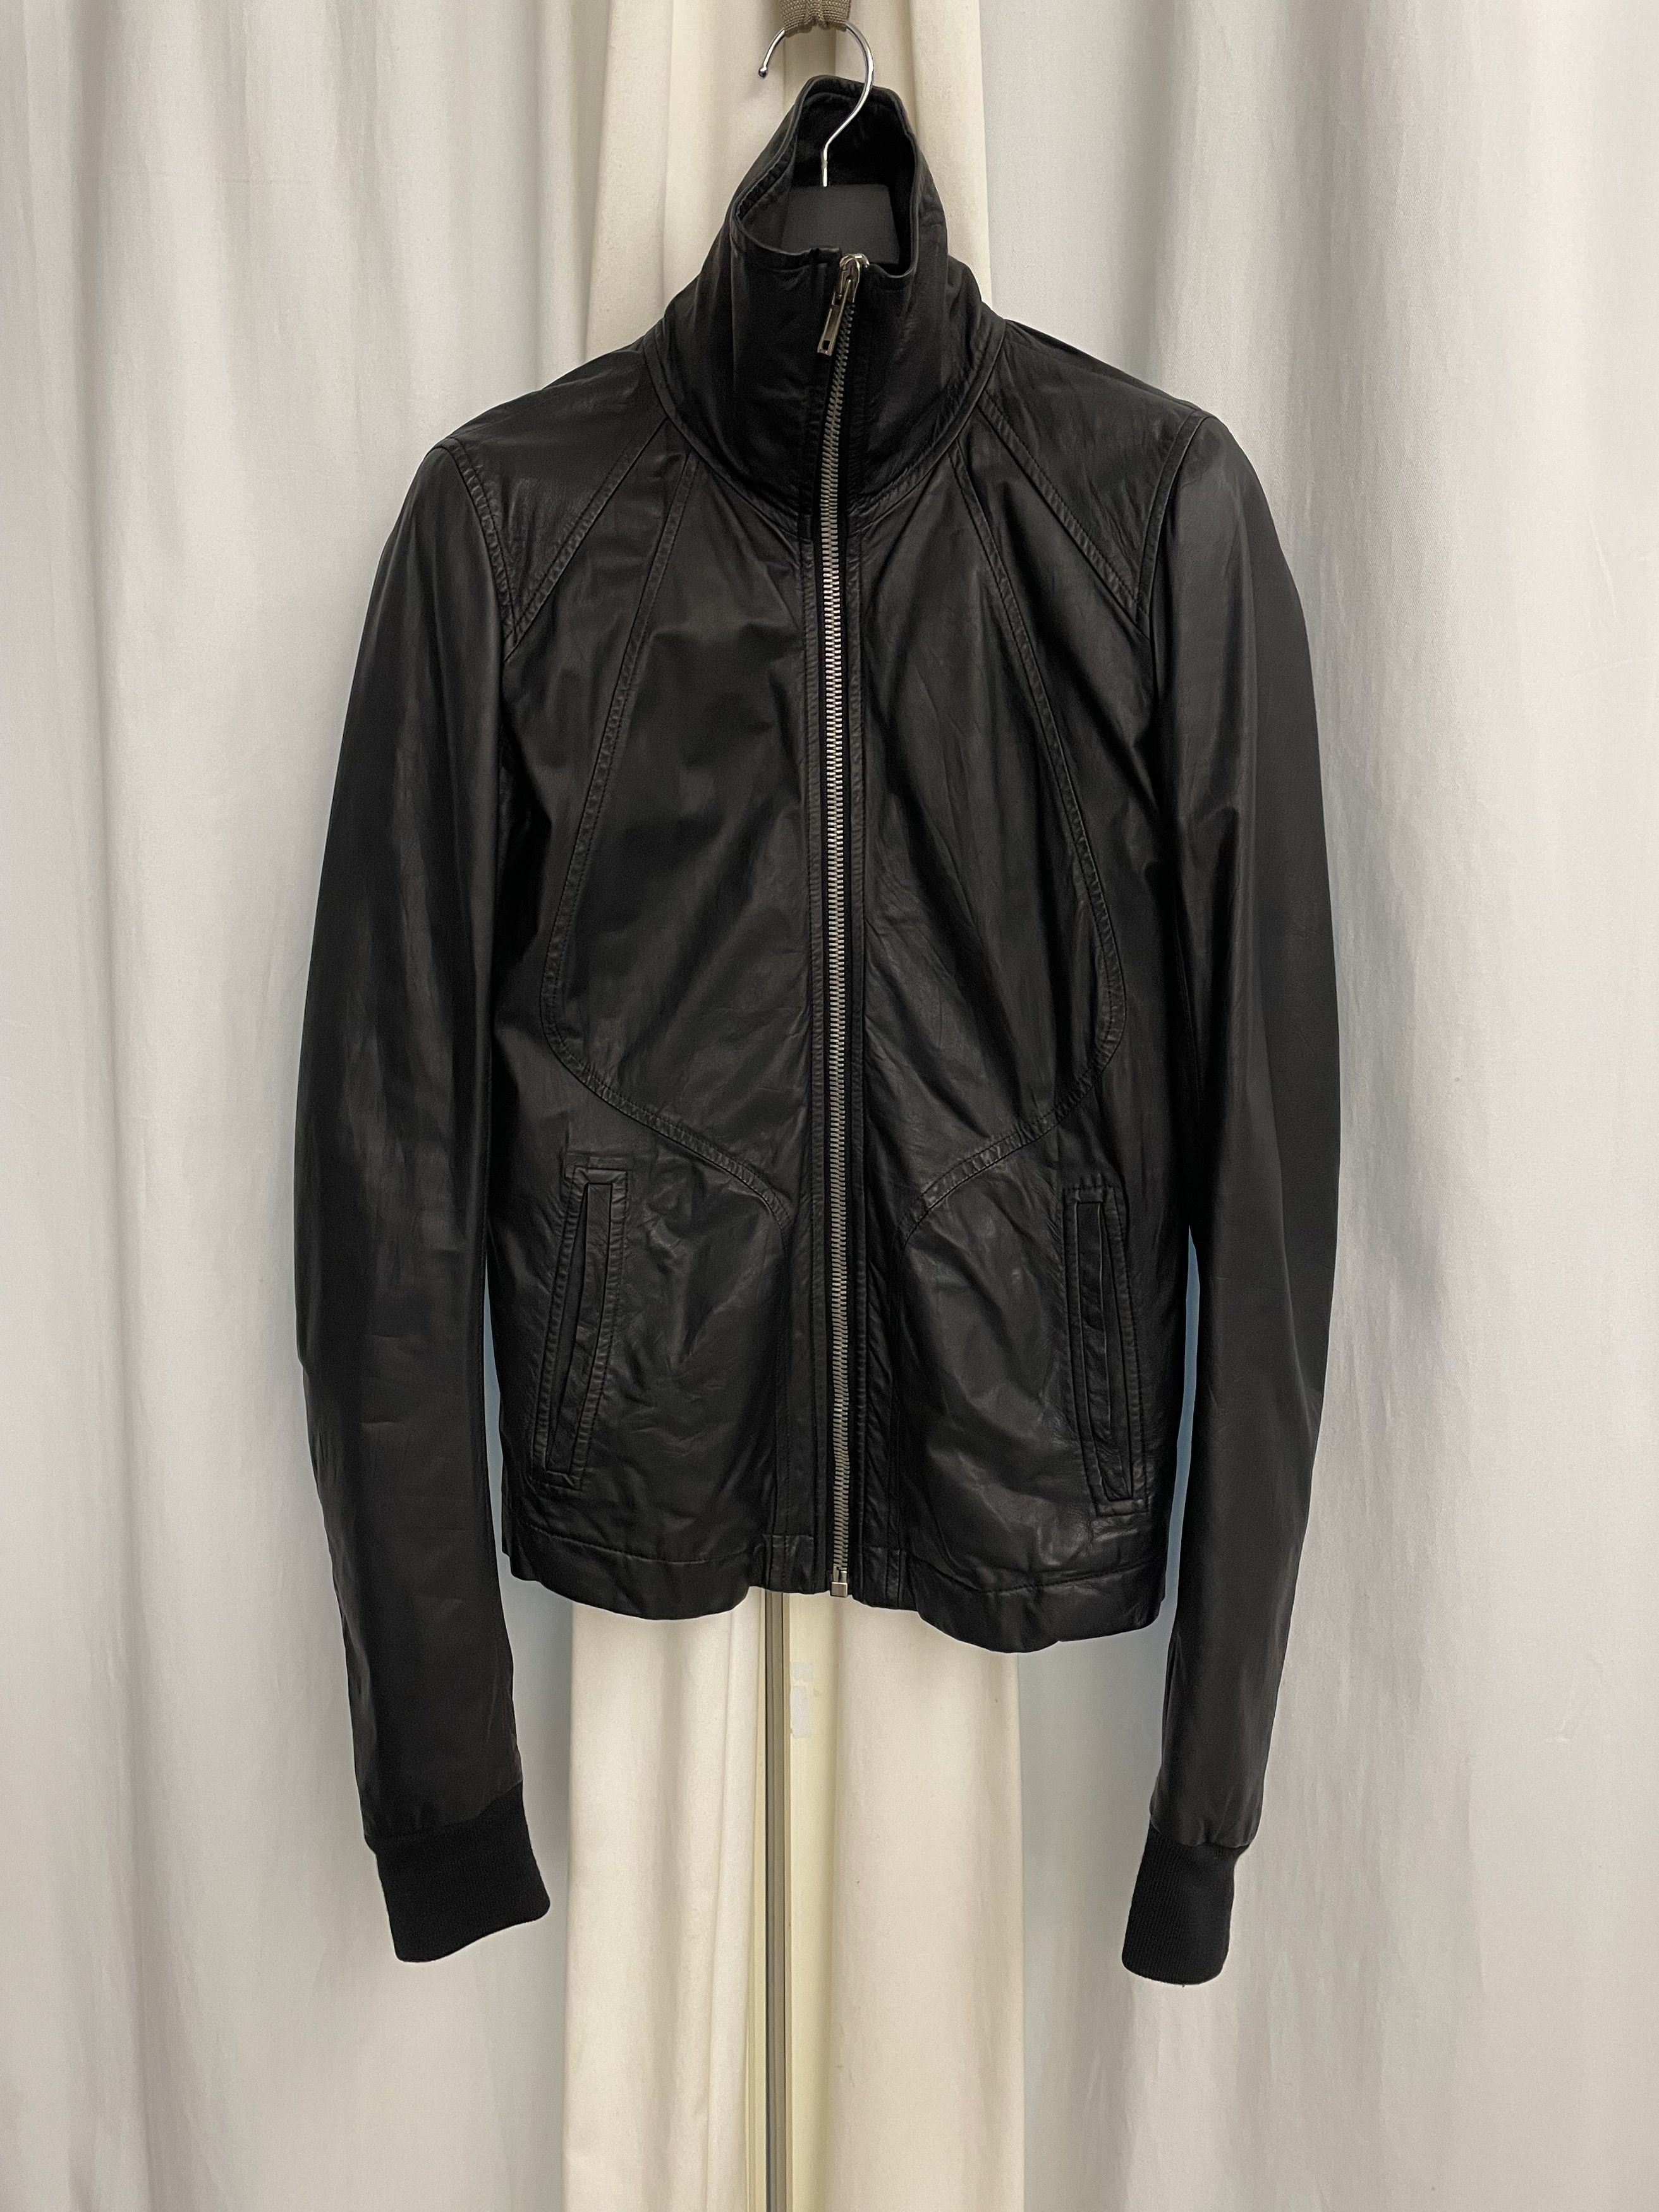 Rick Owens Calf leather Intarsia jacket 46 | Grailed